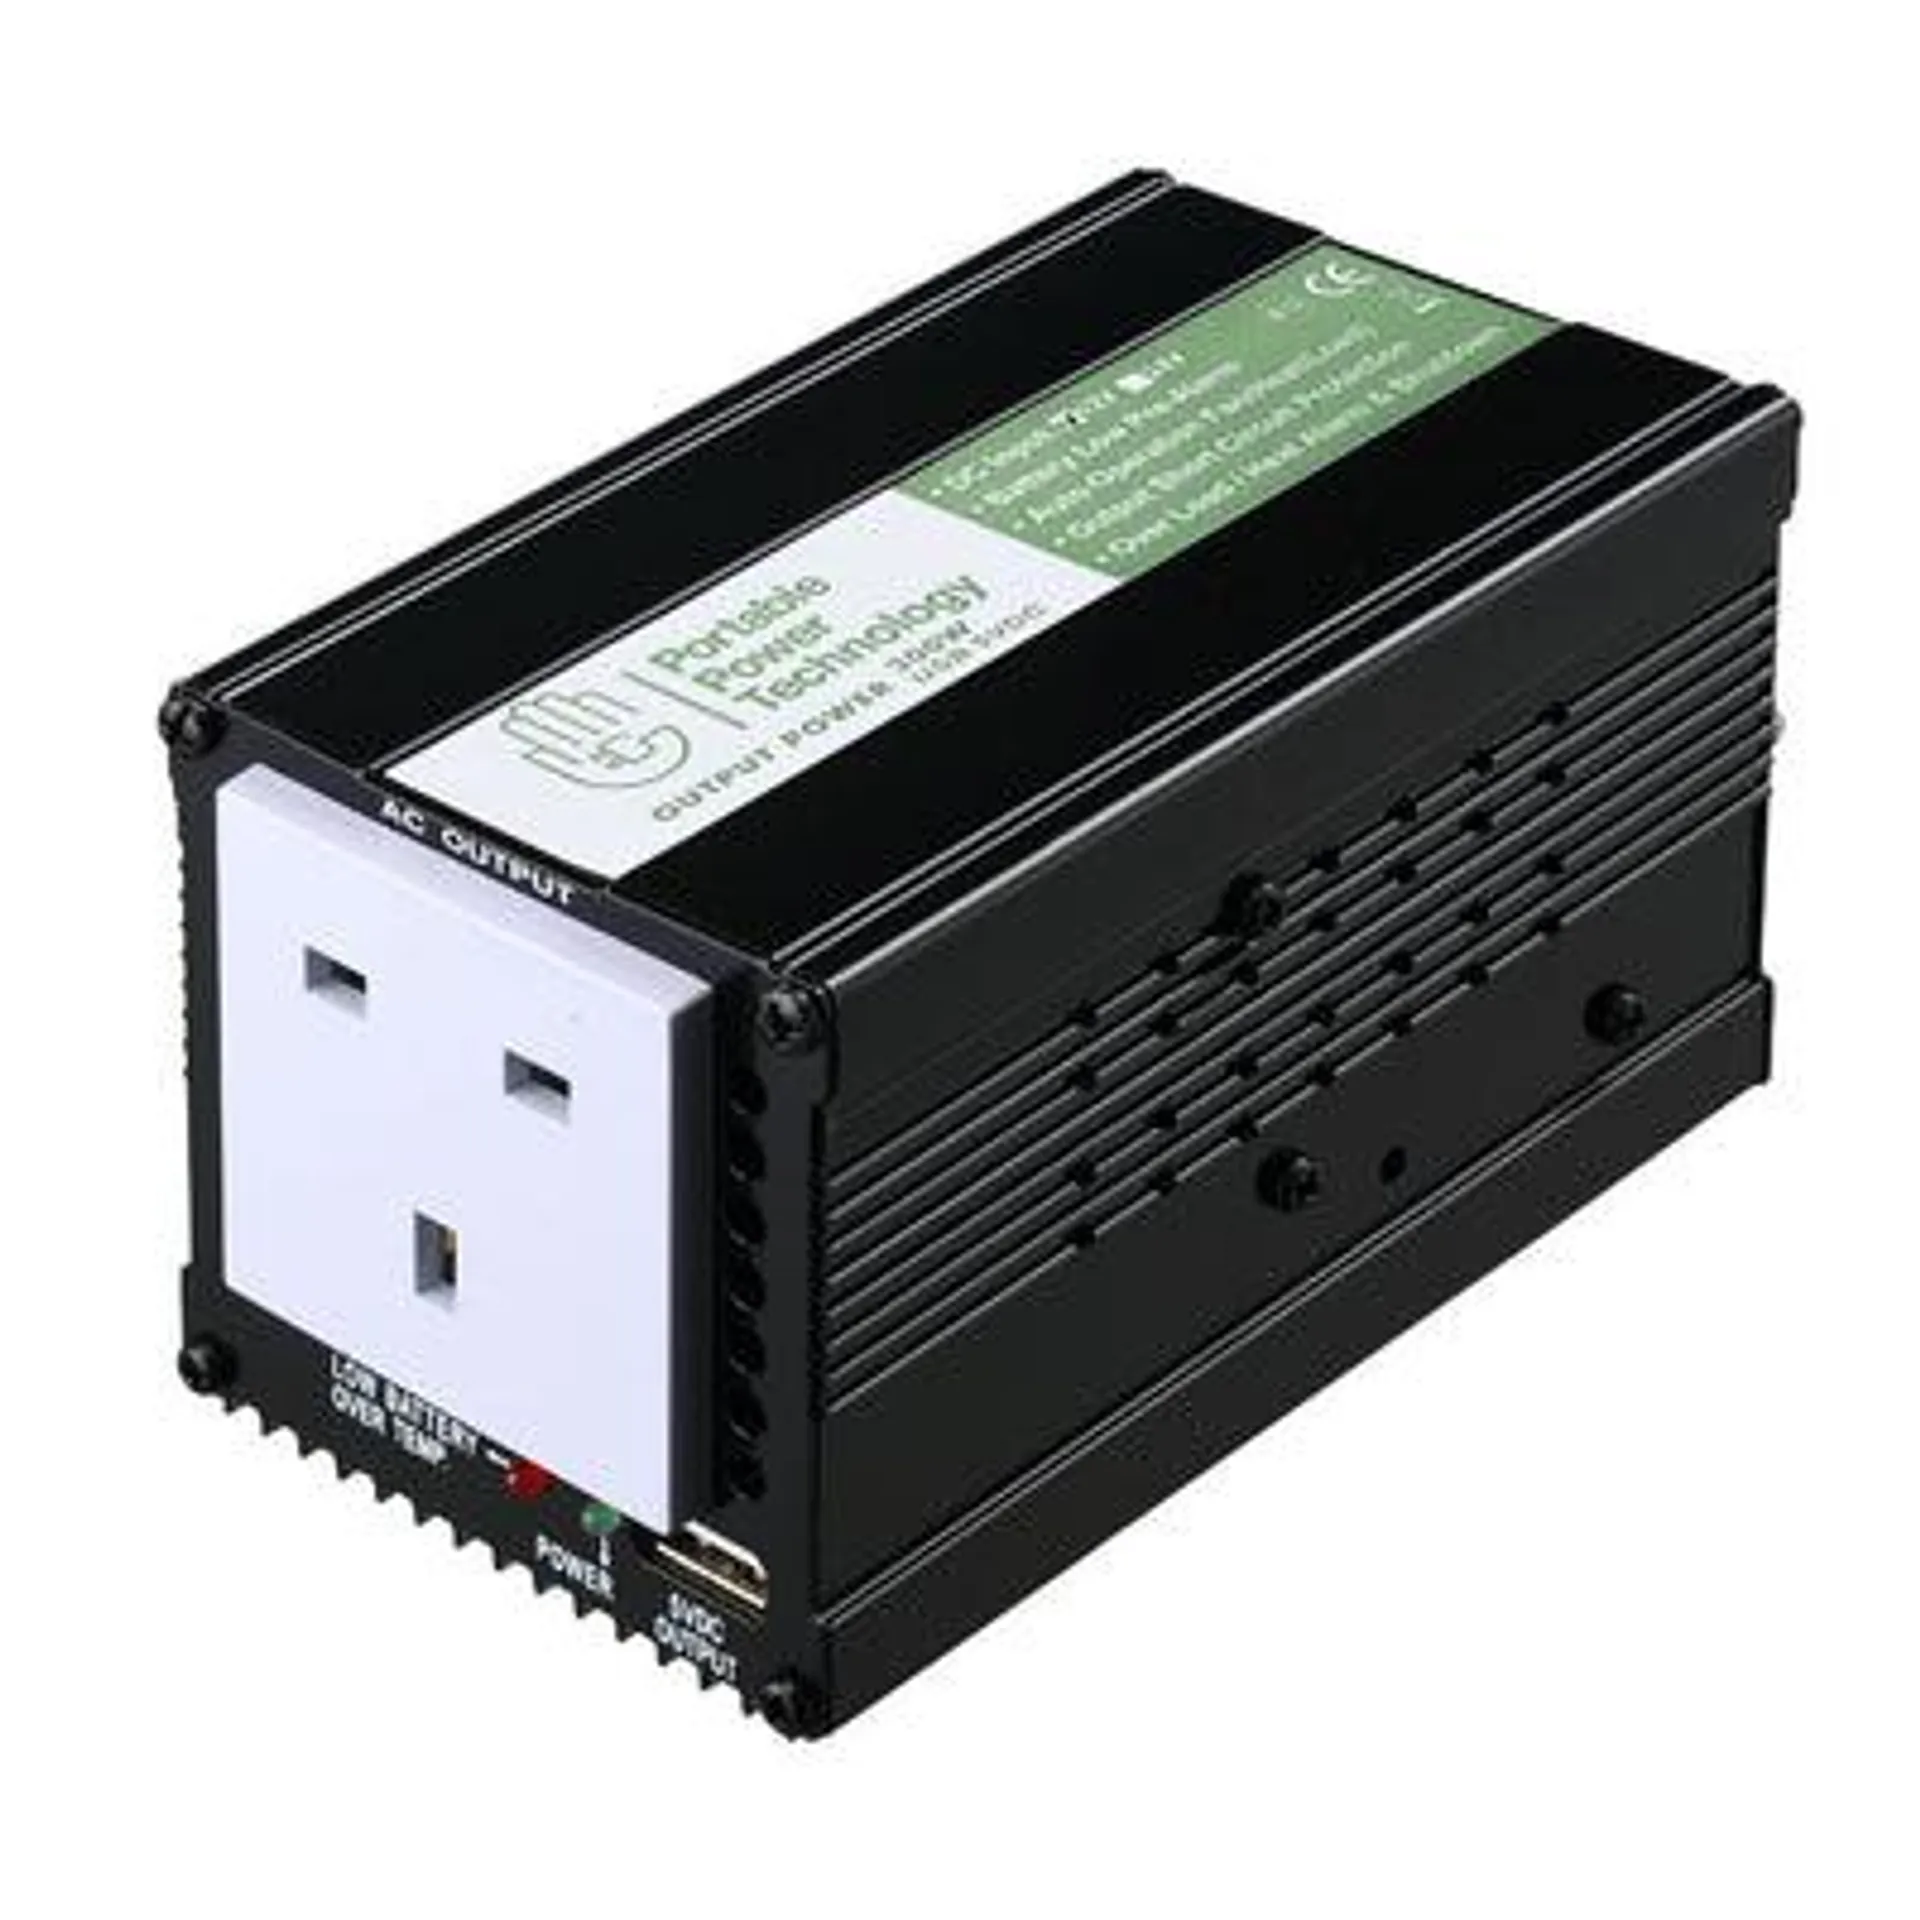 PPT 300W 12V Power Inverter with USB